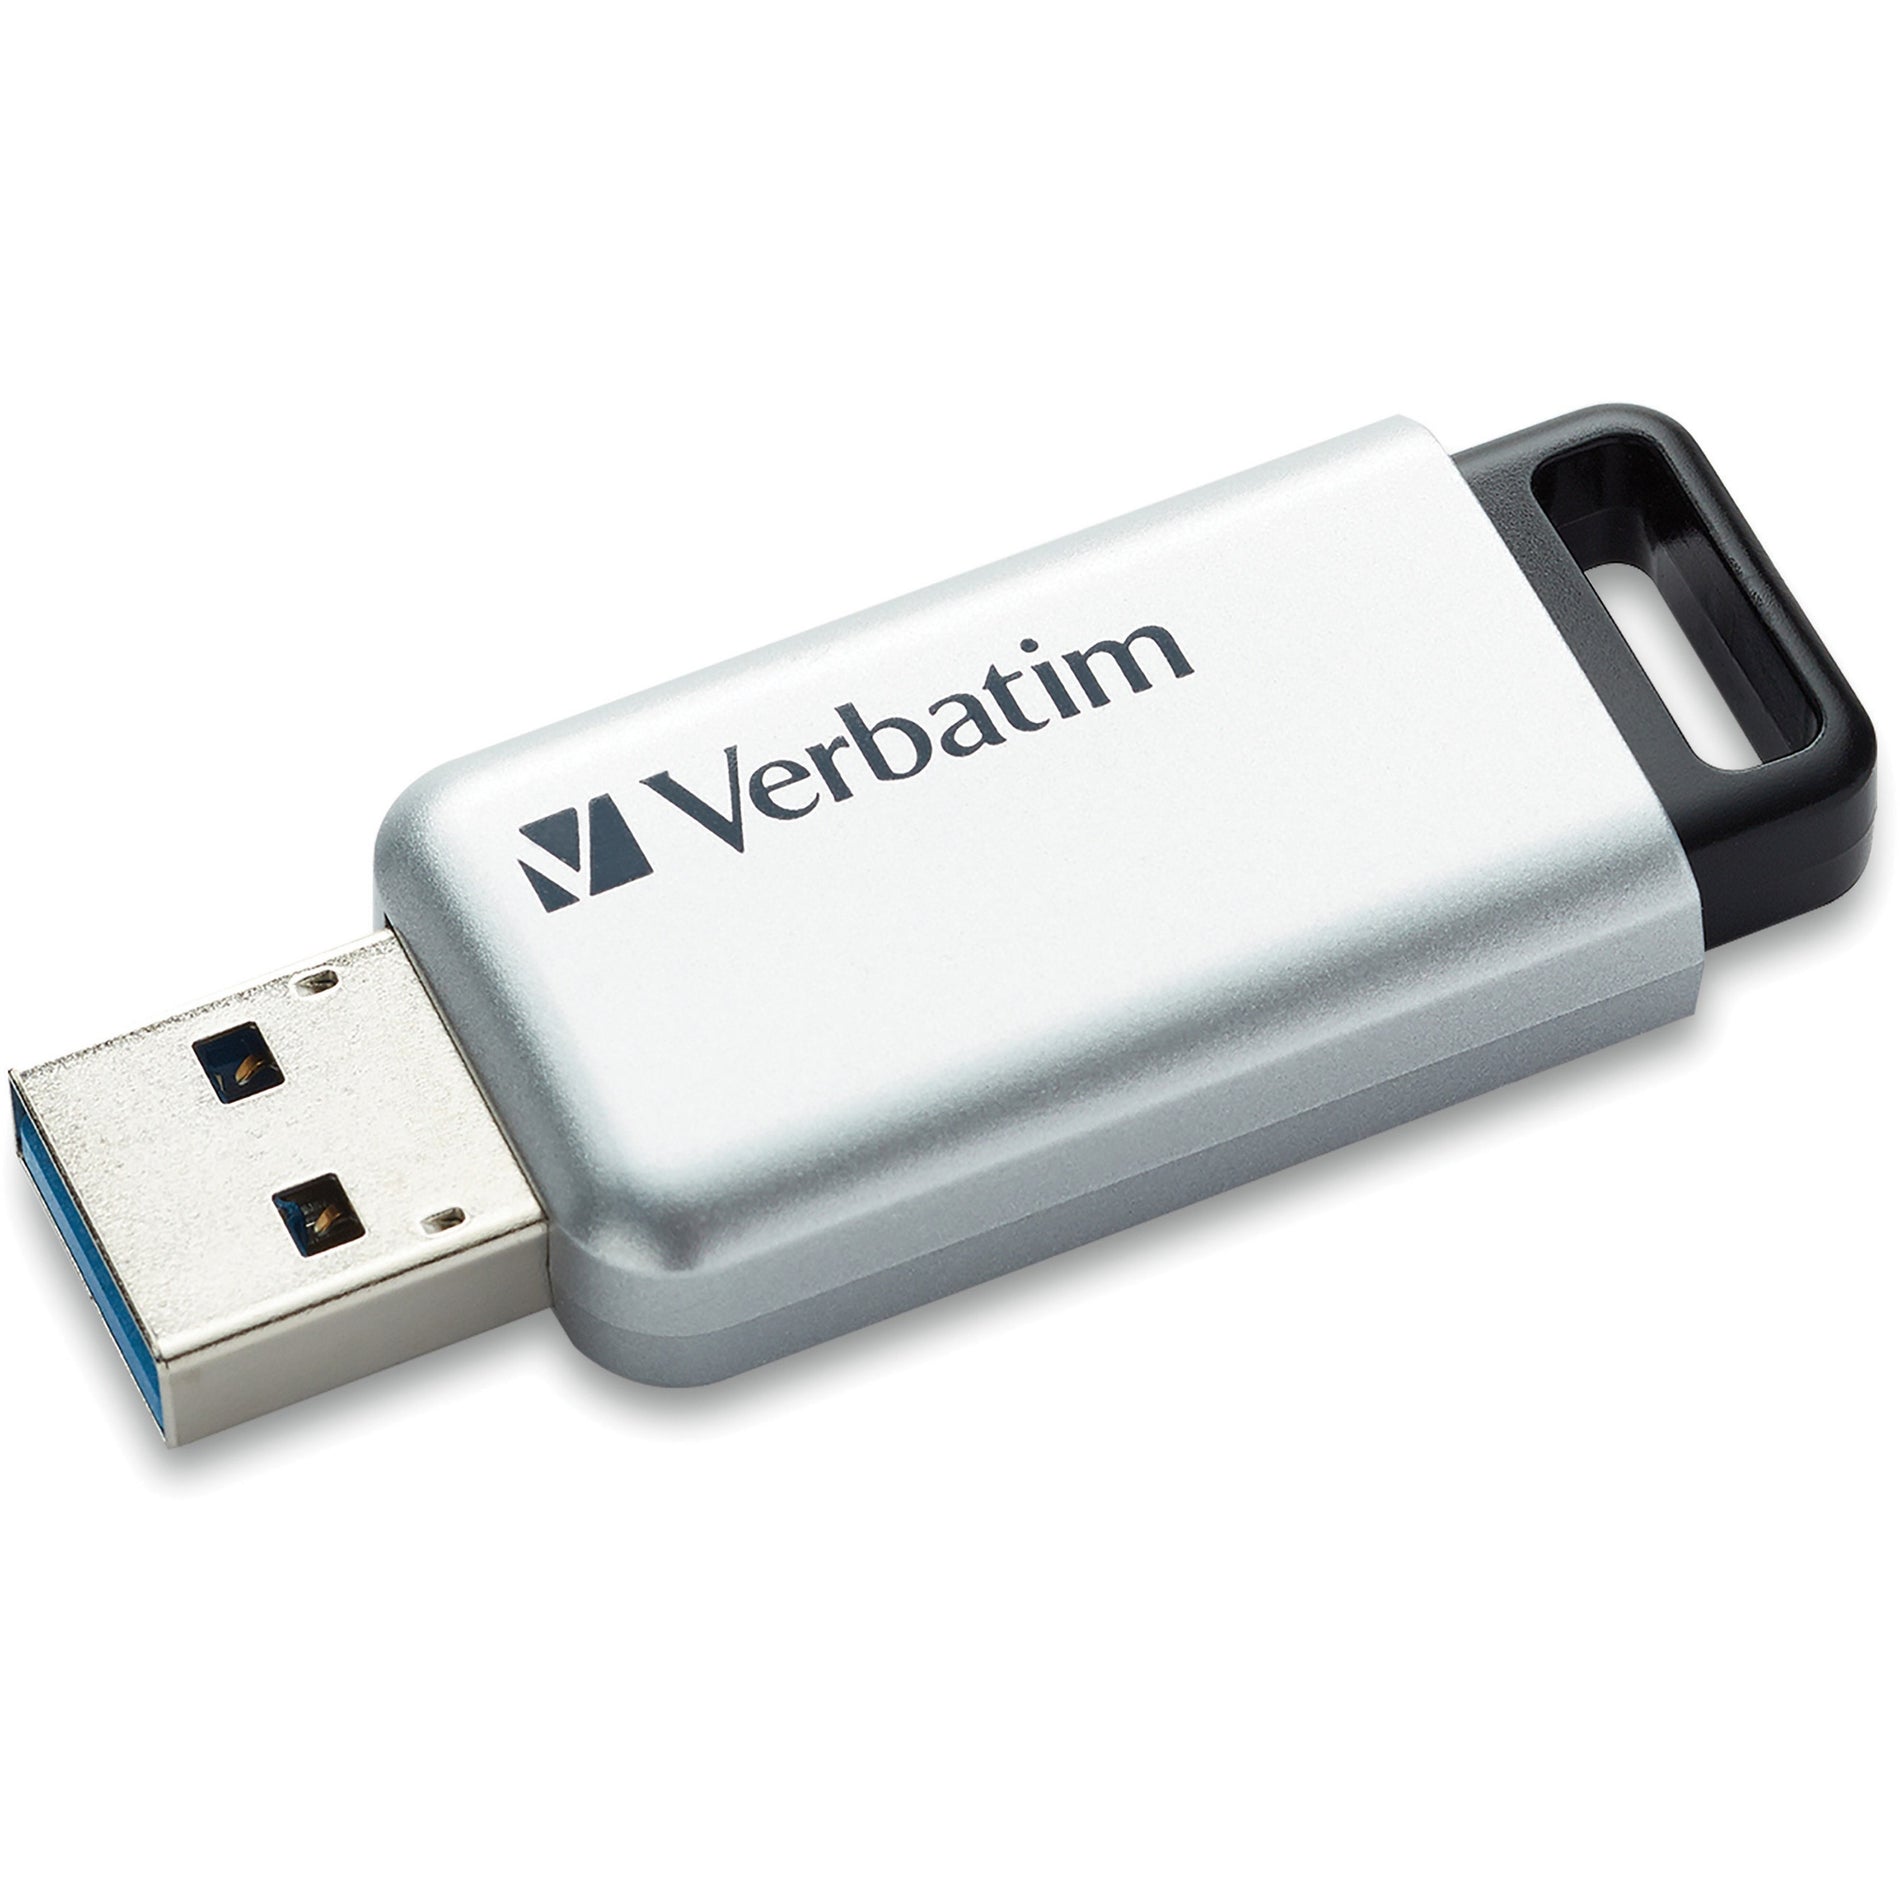 Verbatim 70057 Store 'n' Go Secure Pro 128GB USB 3.0 Flash Drive, Lifetime Warranty, 256-bit AES Encryption